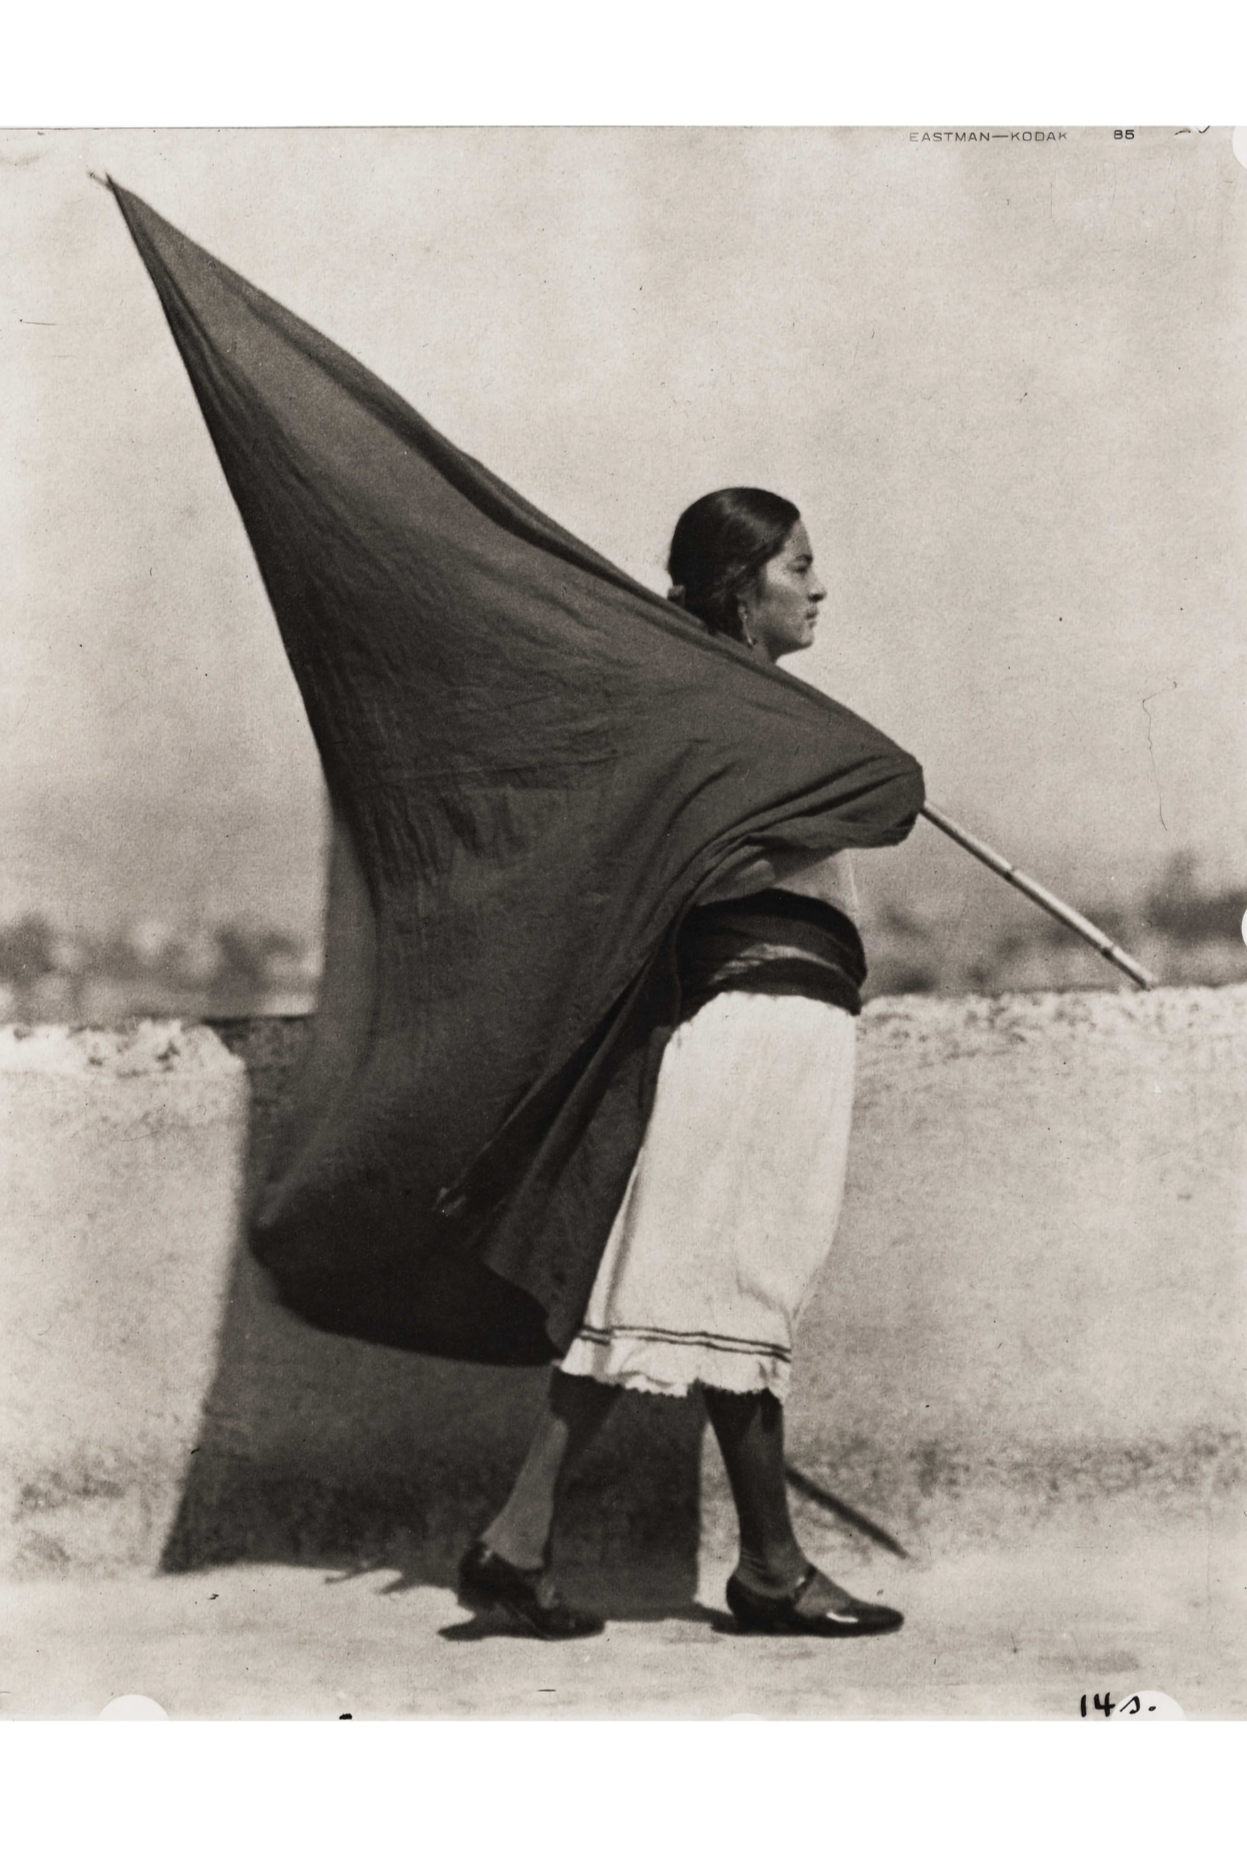 Woman with Flag by Tina Modotti - 1928 - Postcard